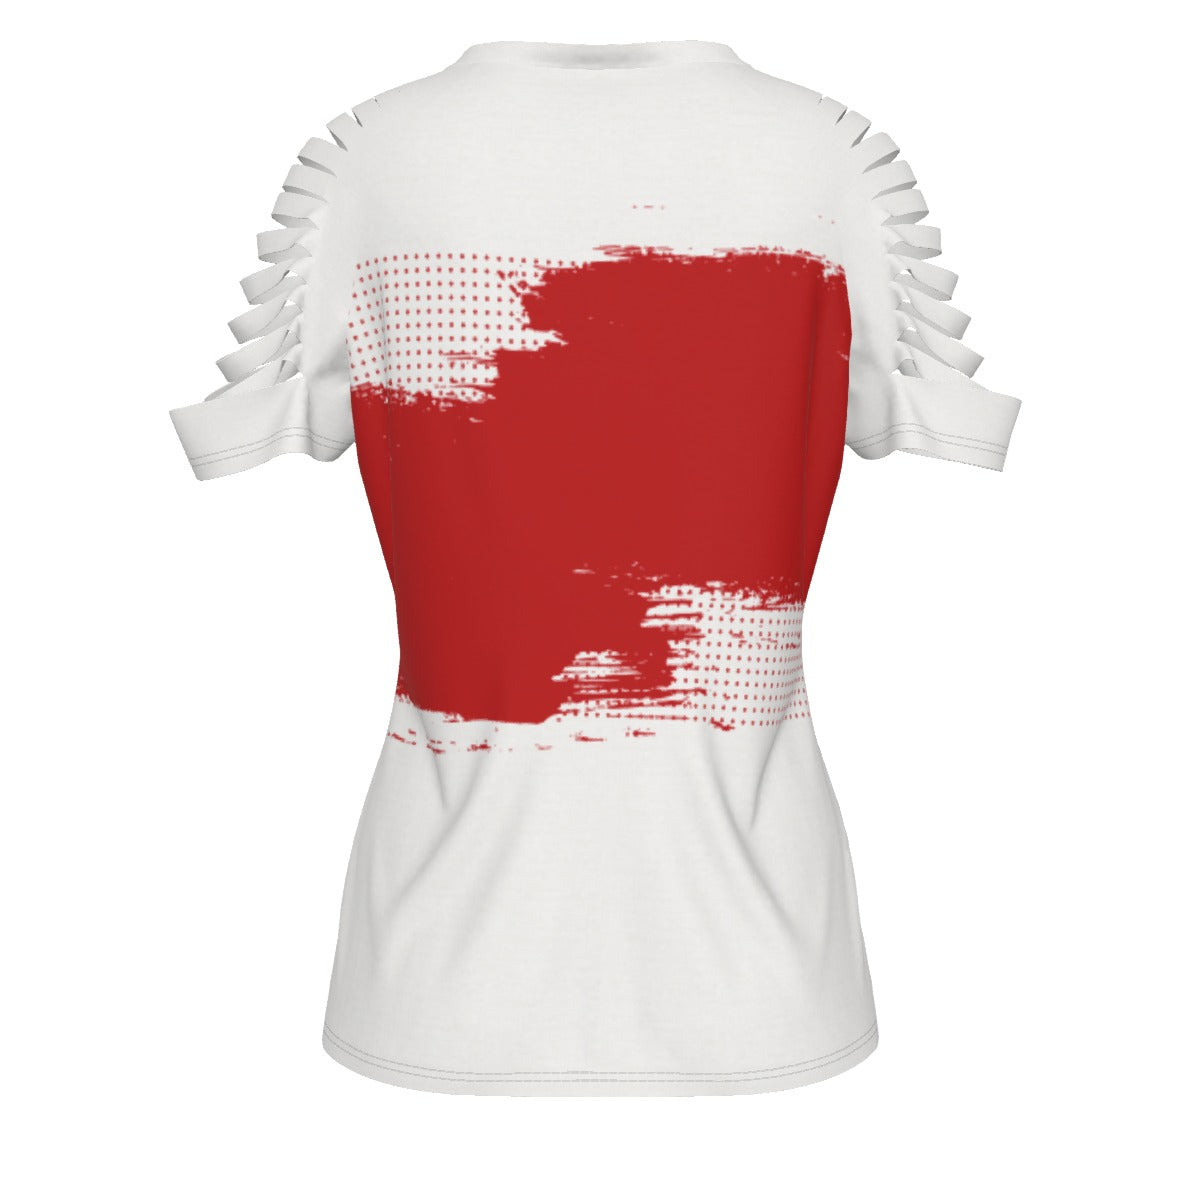 Fynix Studios Women's All Over Print Ripped T-shirt